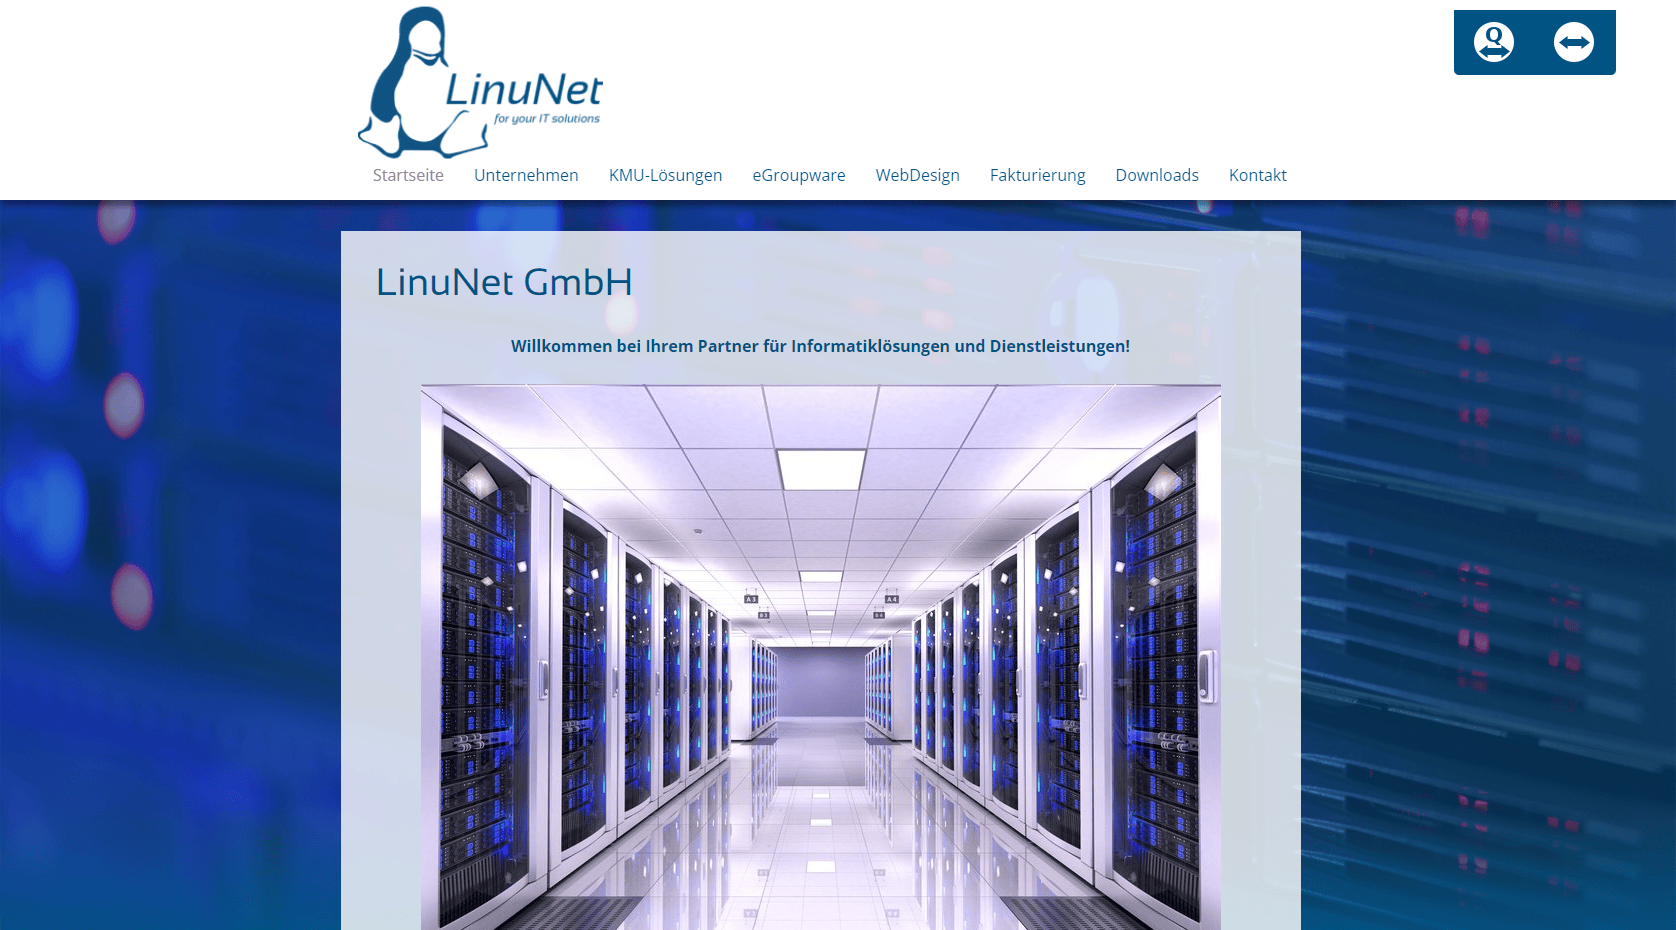 LinuNet GmbH